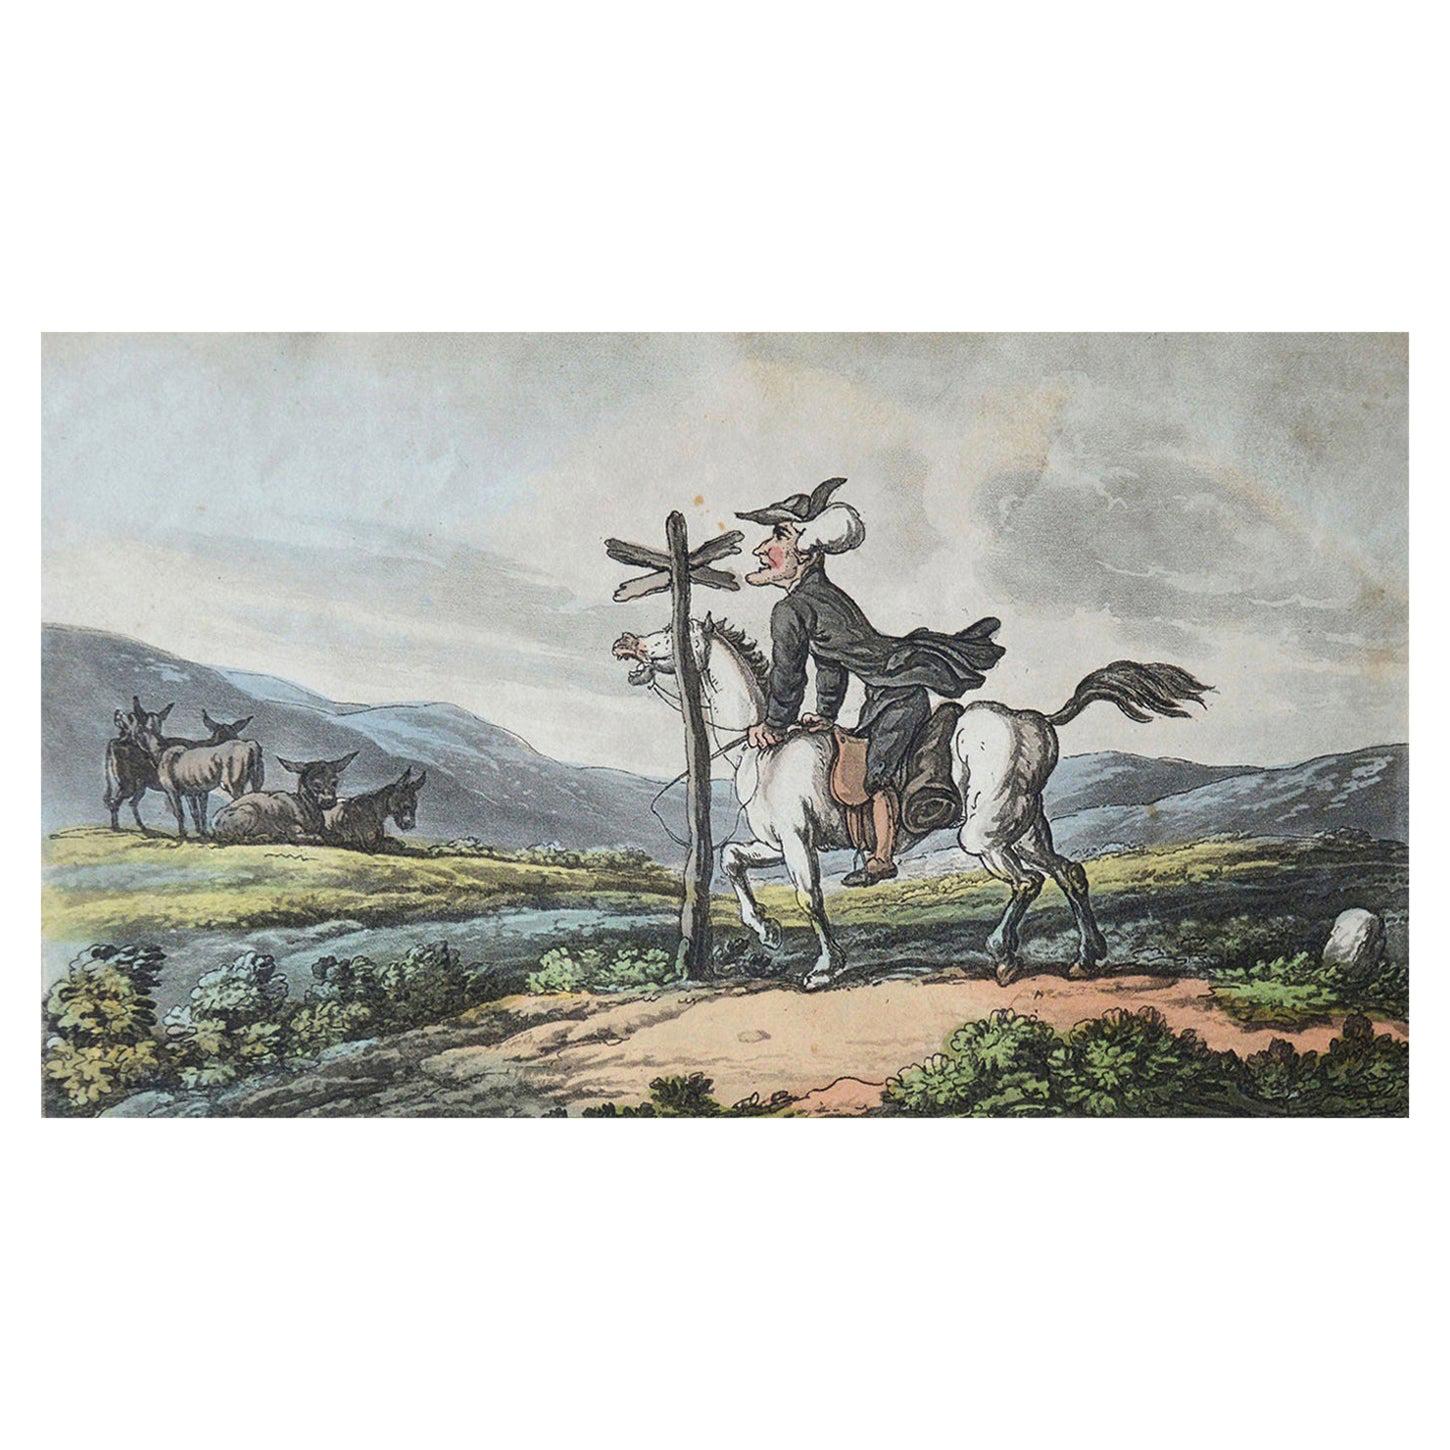 Original Antique Print after Thomas Rowlandson, 1813